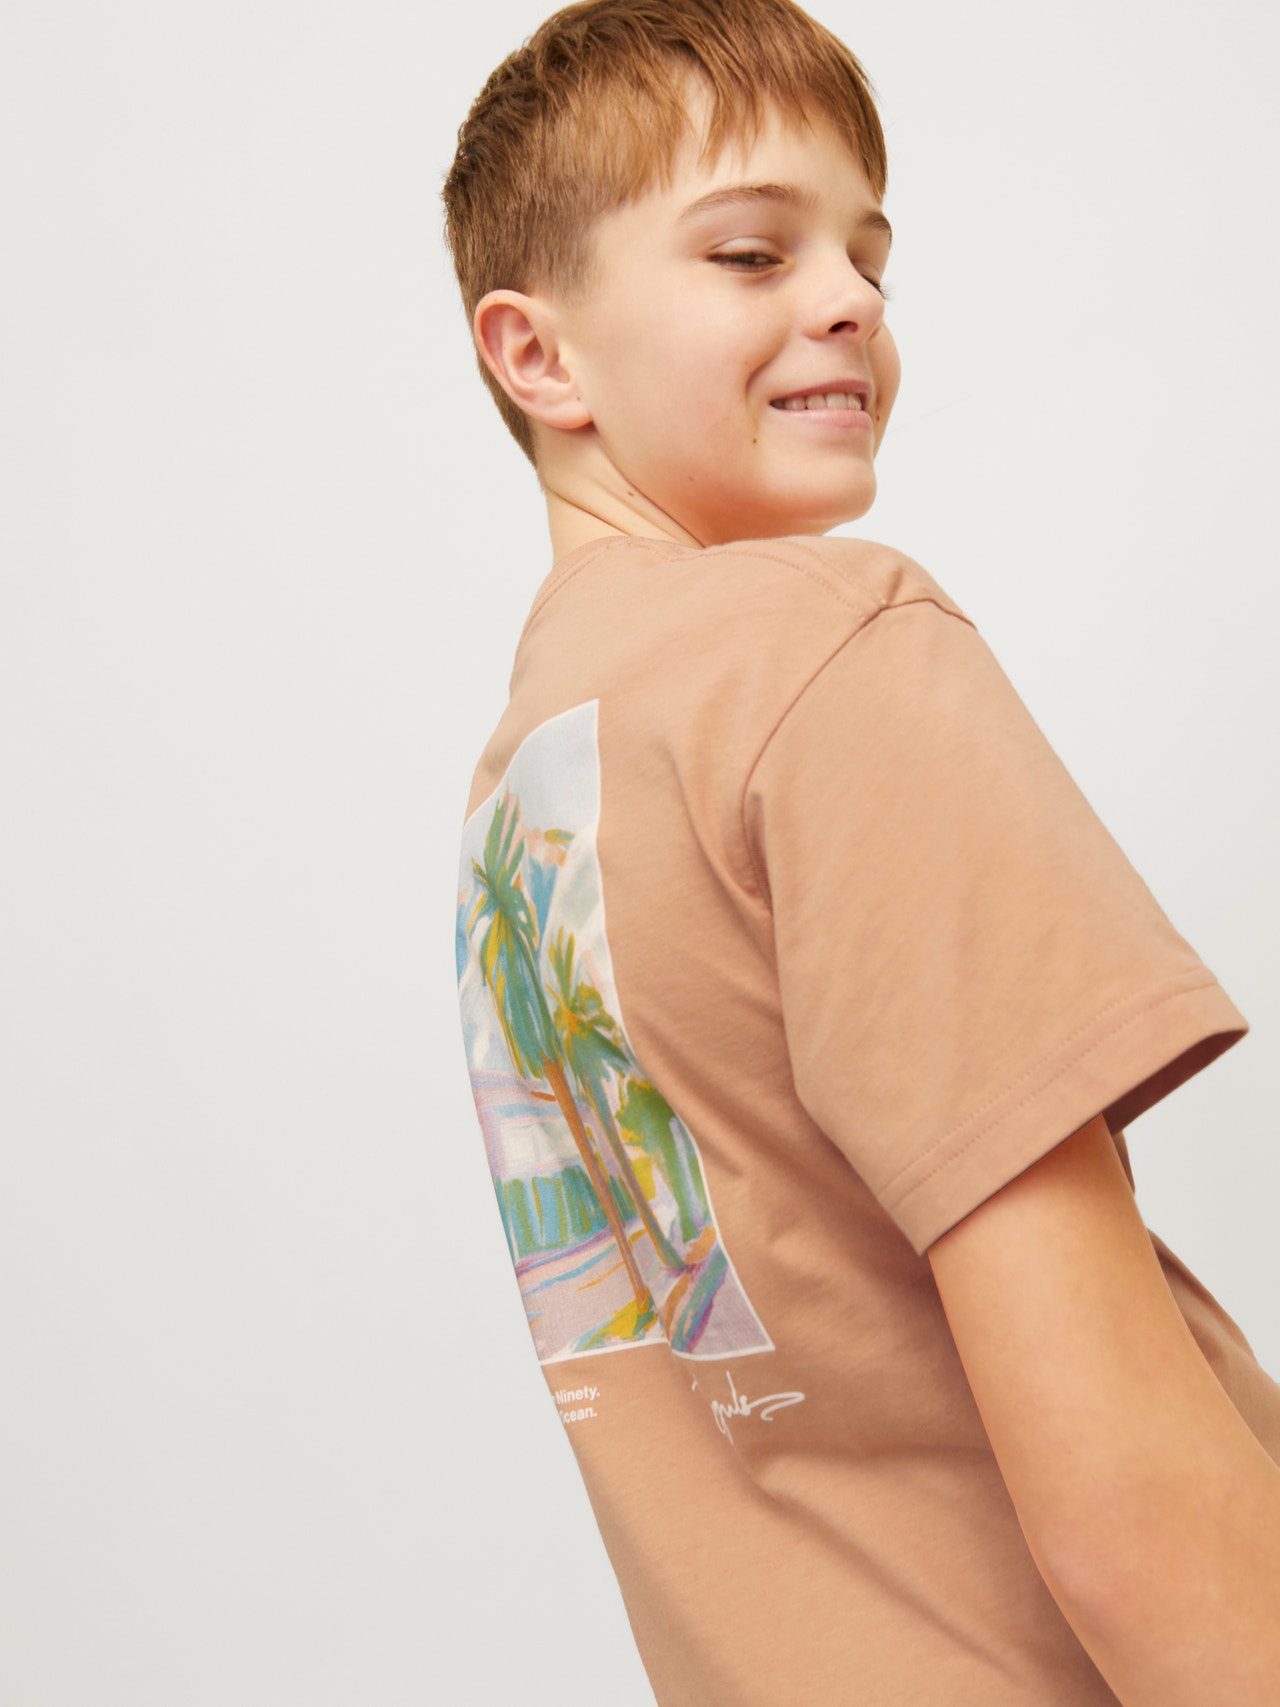 Jack & Jones Camiseta Estampado Para chicos -Canyon Sunset - 12257134